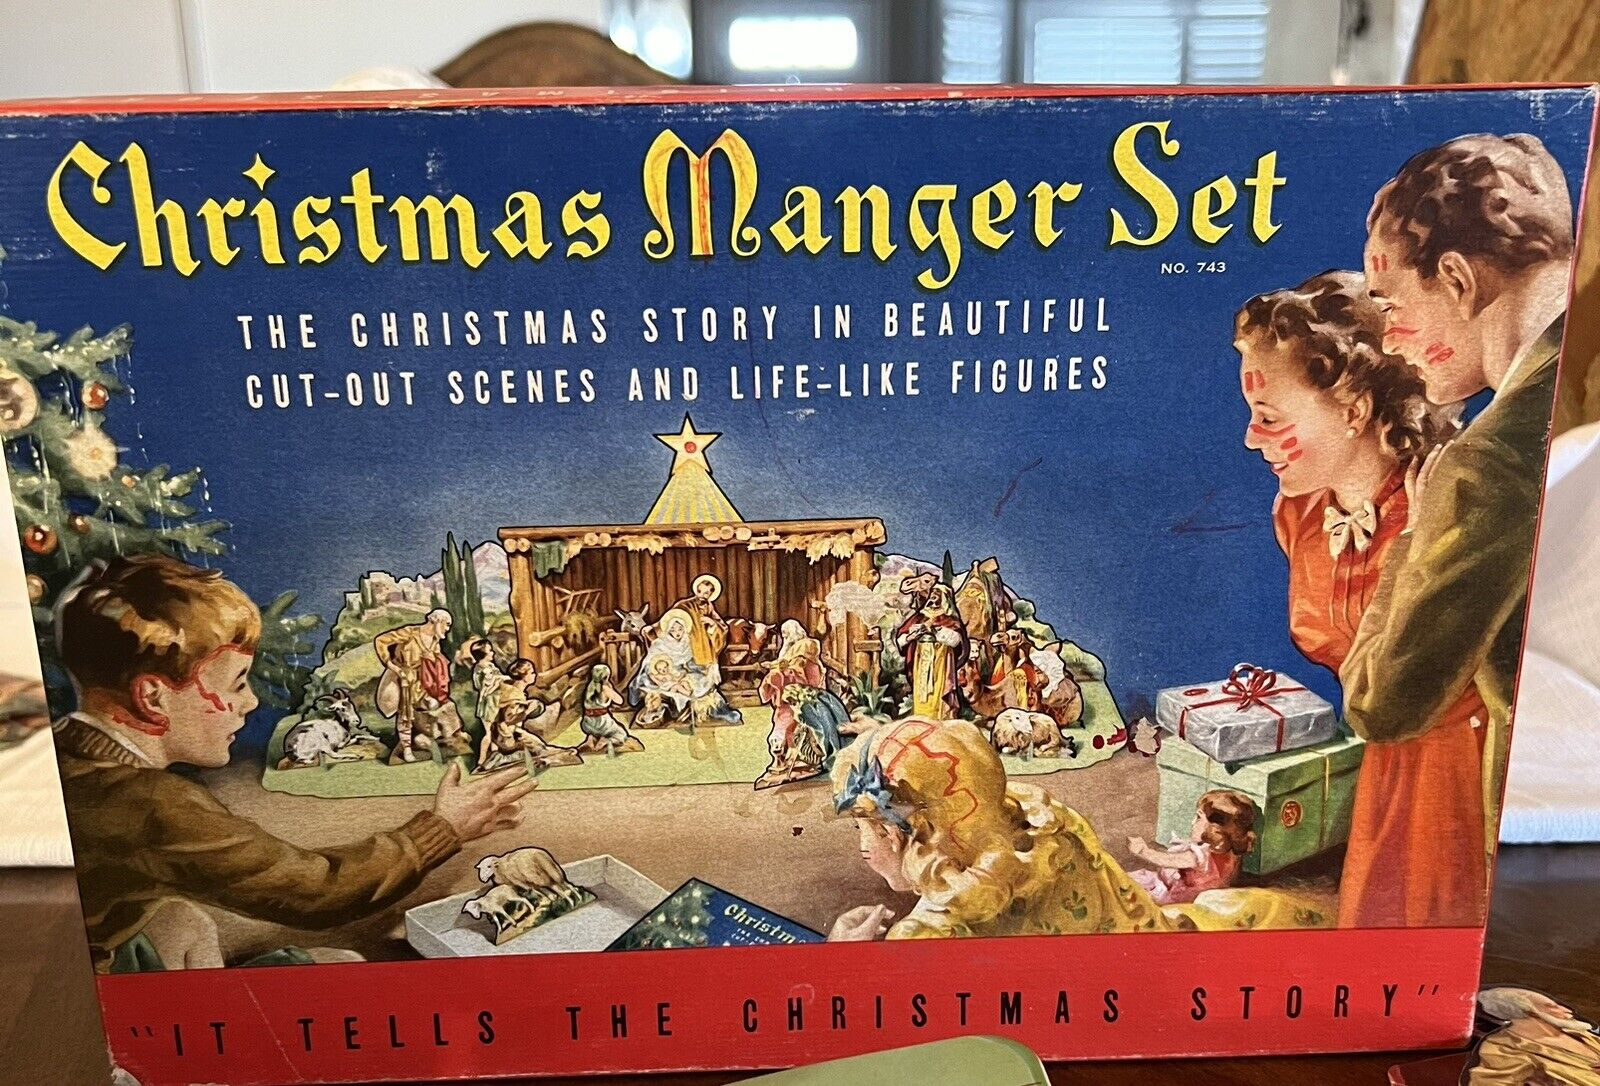 Vintage Christmas Manger Nativity Set Cardboard No. 743 in Original Box